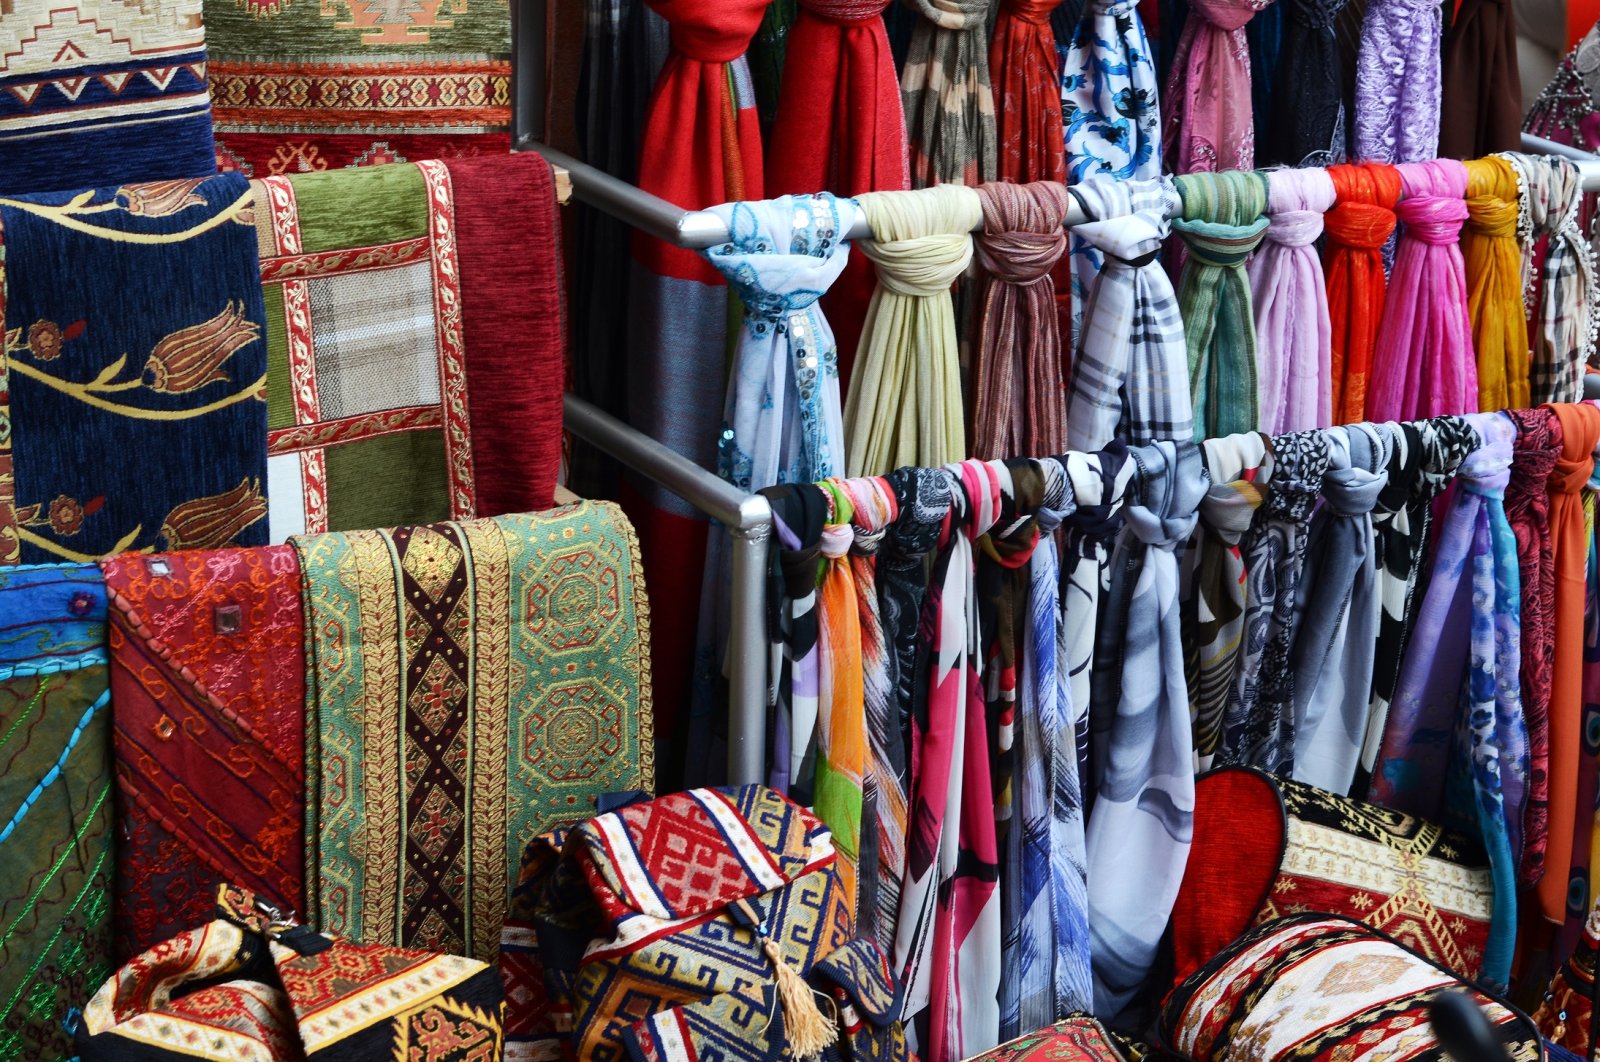 Anatolian fabrics for rugs and shawls. (Shutterstock Photo)